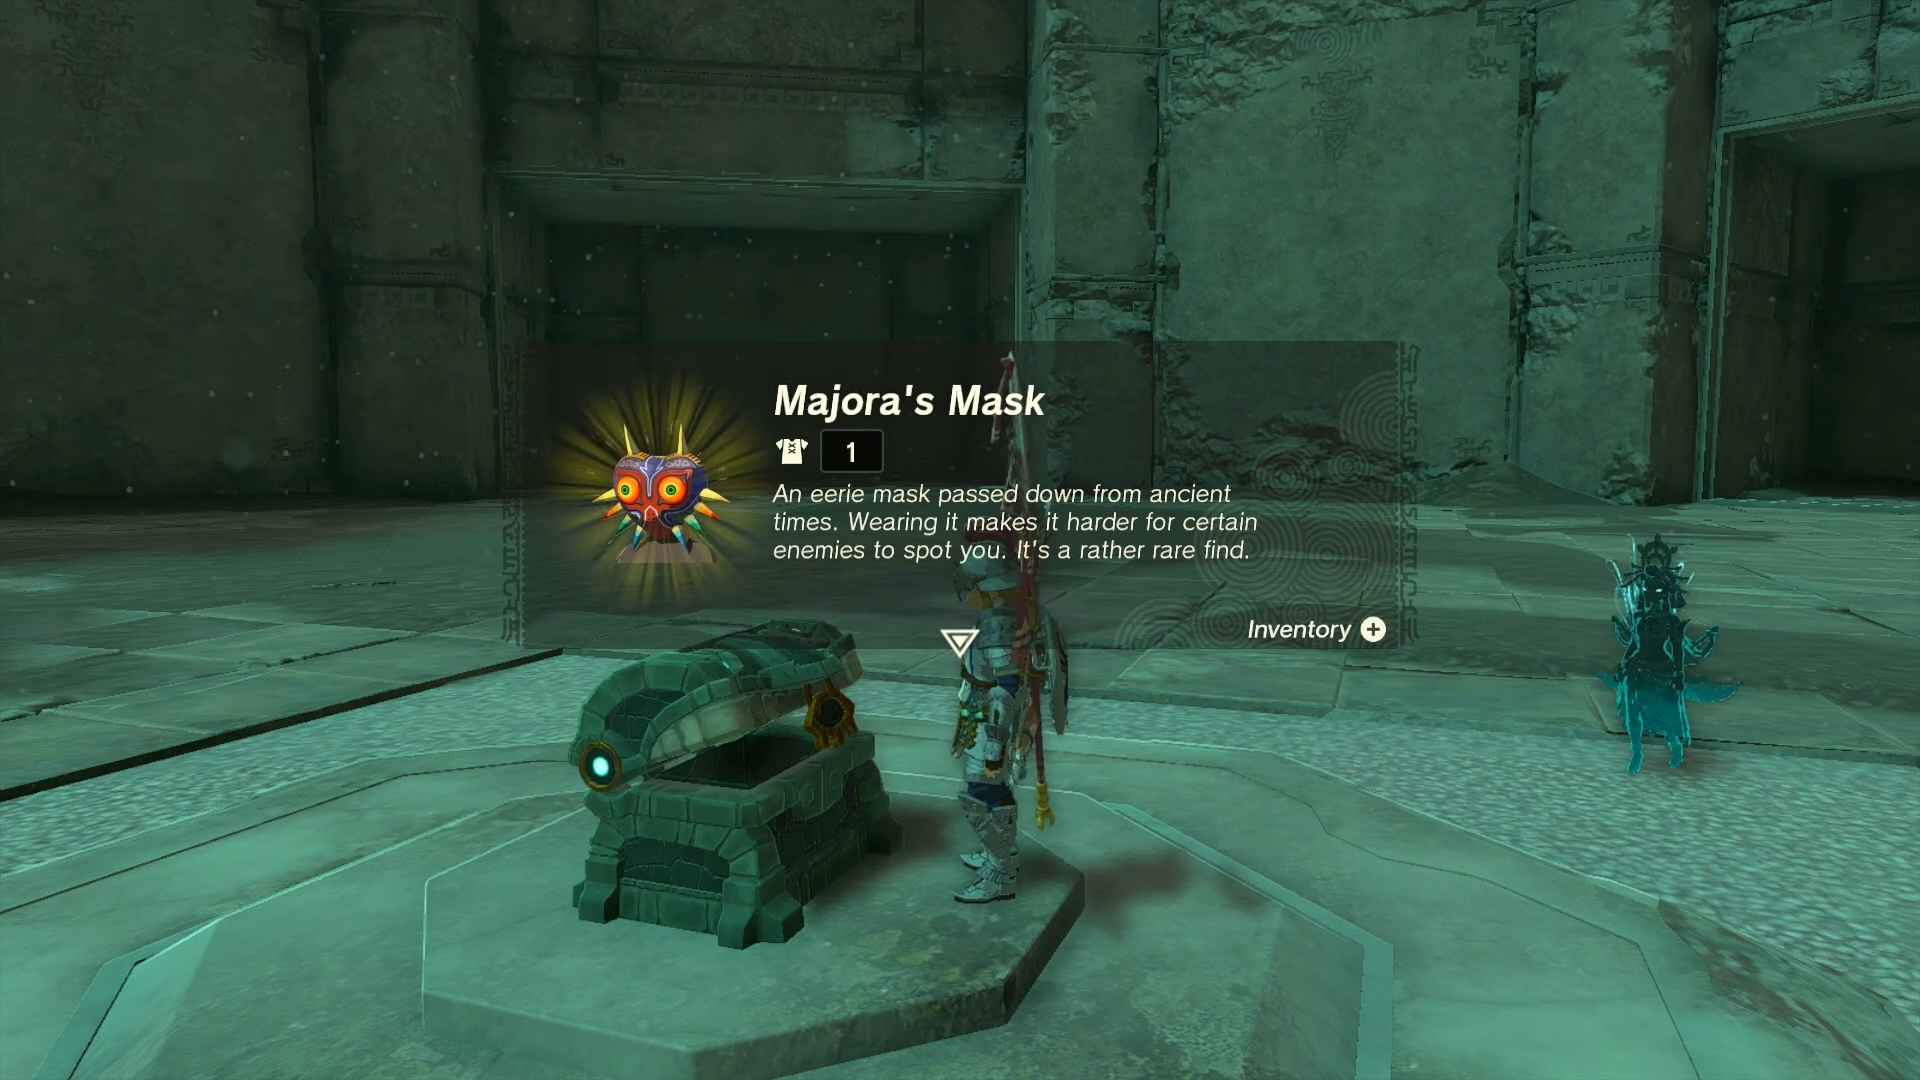 How To Get Majora's Mask in Zelda: Tears of the Kingdom